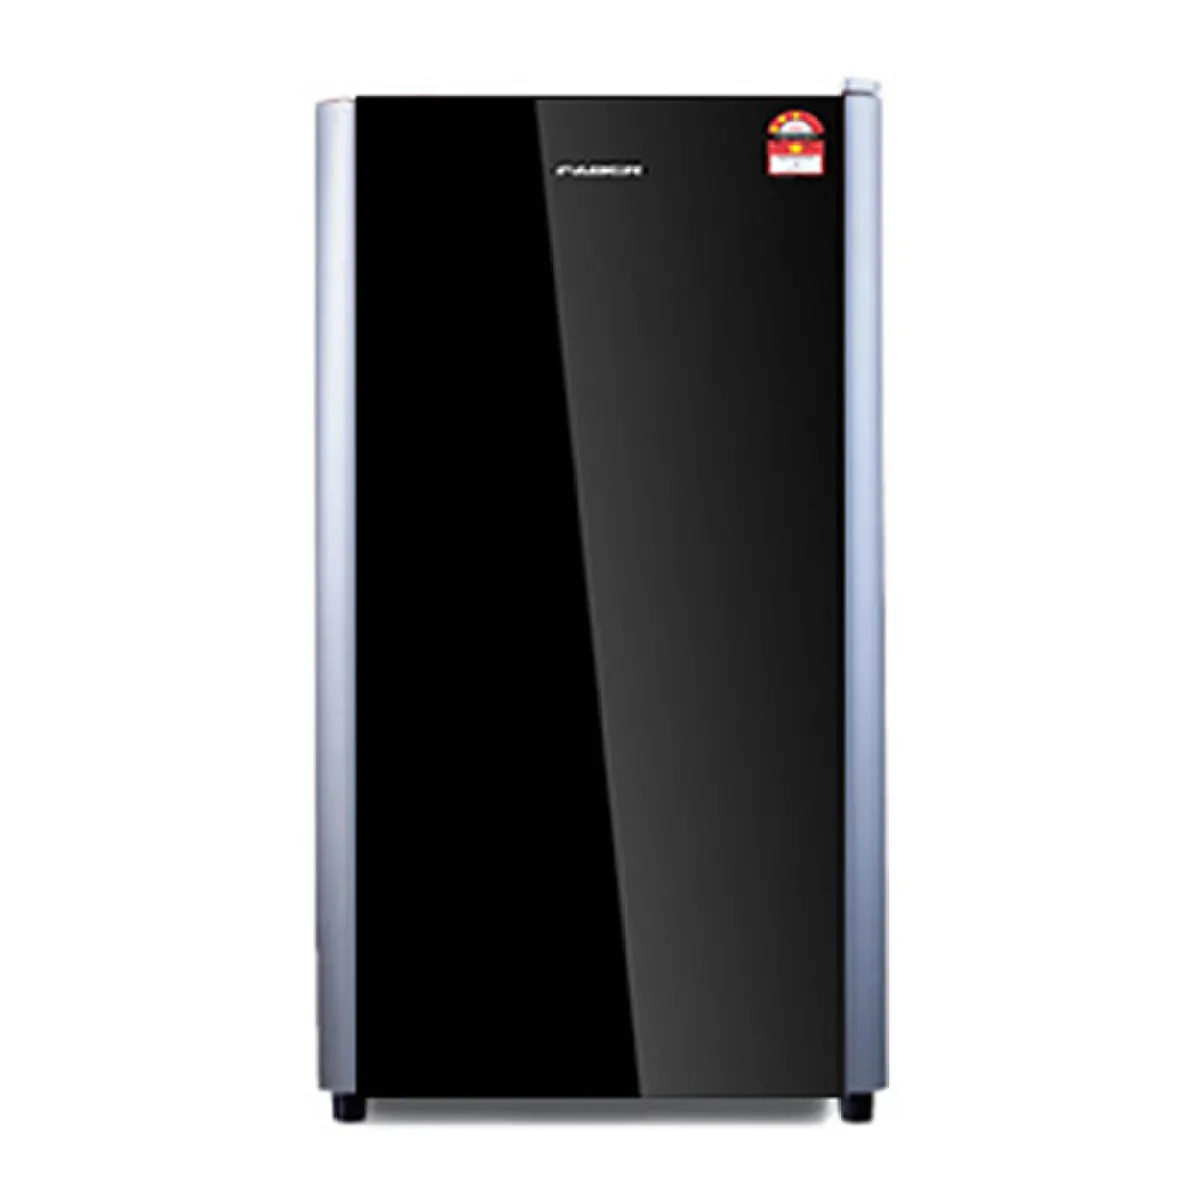 Faber 150L 1 Door Refrigerator FRIGOR 168 BK (Black) | Lazada